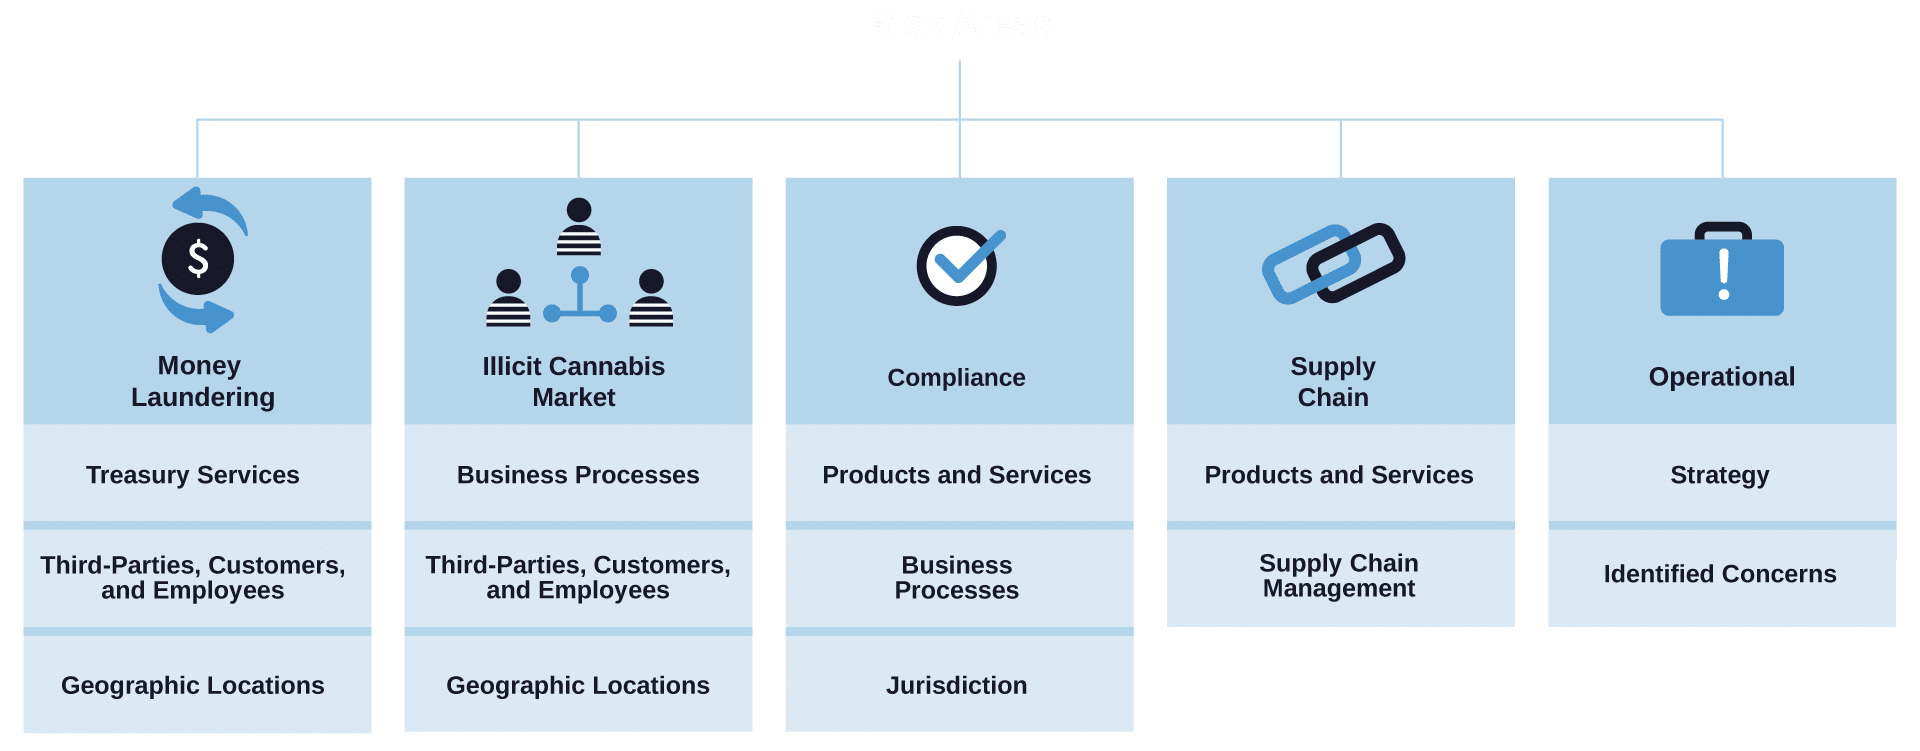 Risk Areas Reverse